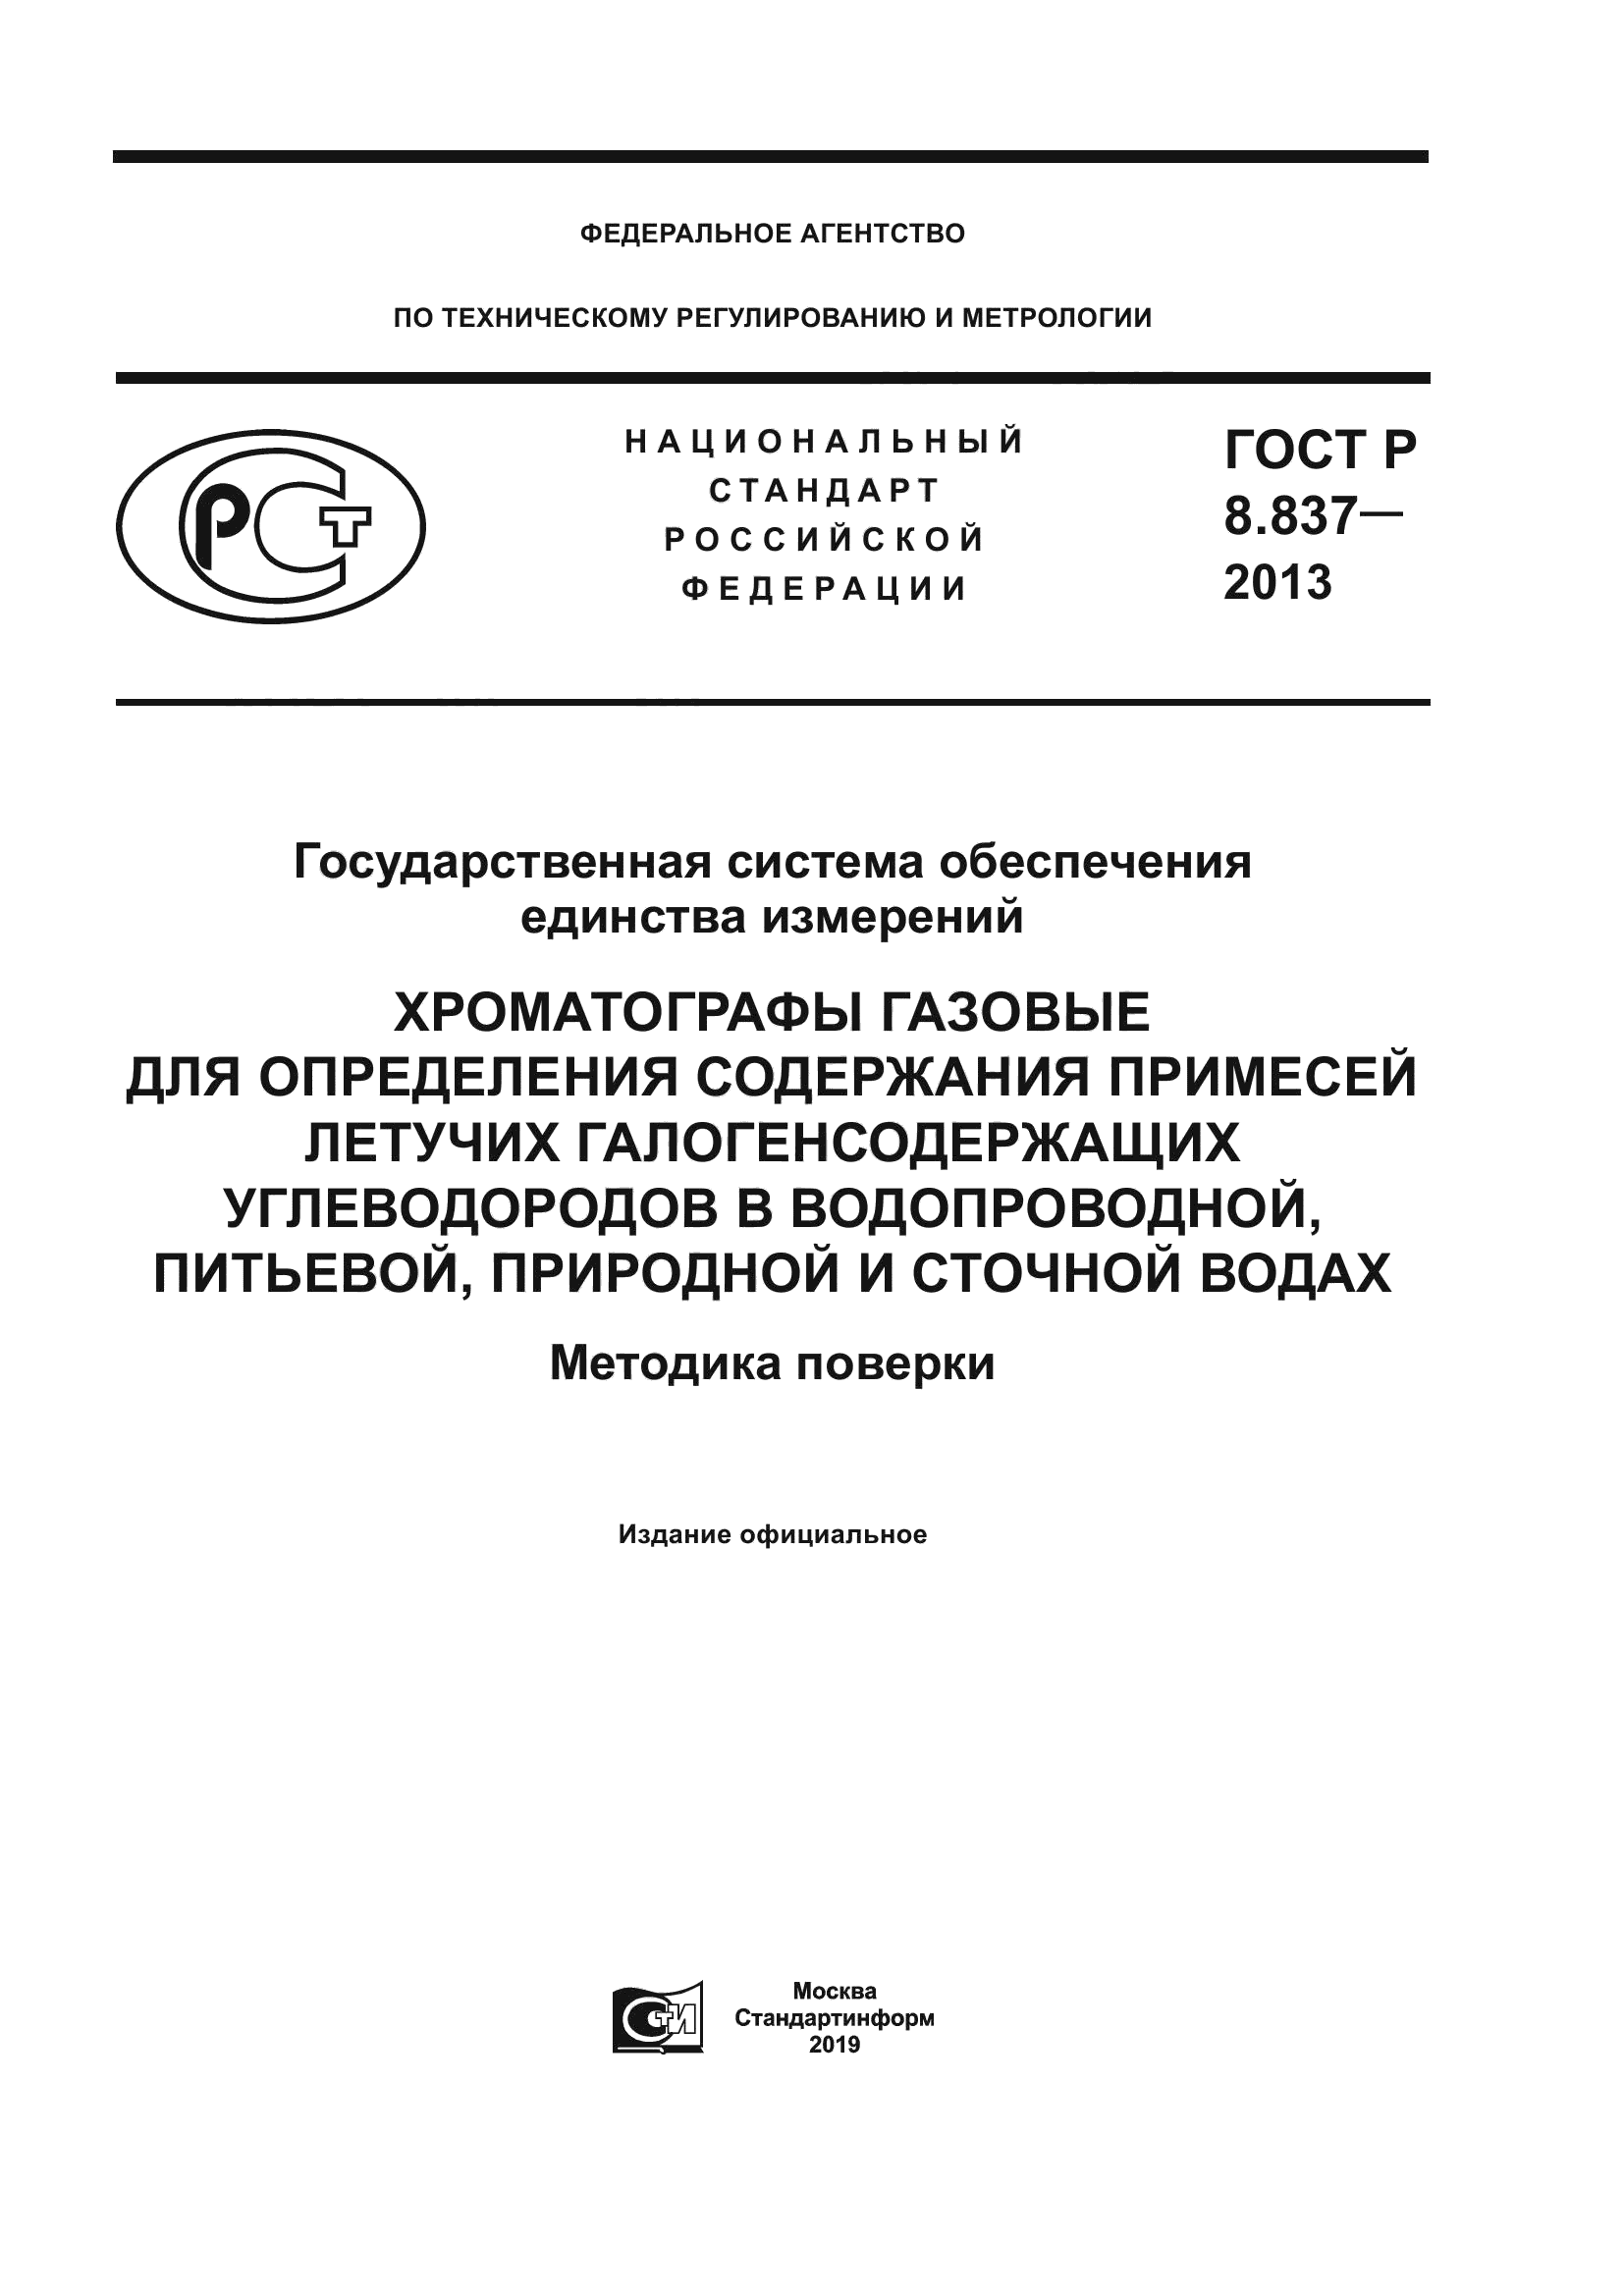 ГОСТ Р 8.837-2013